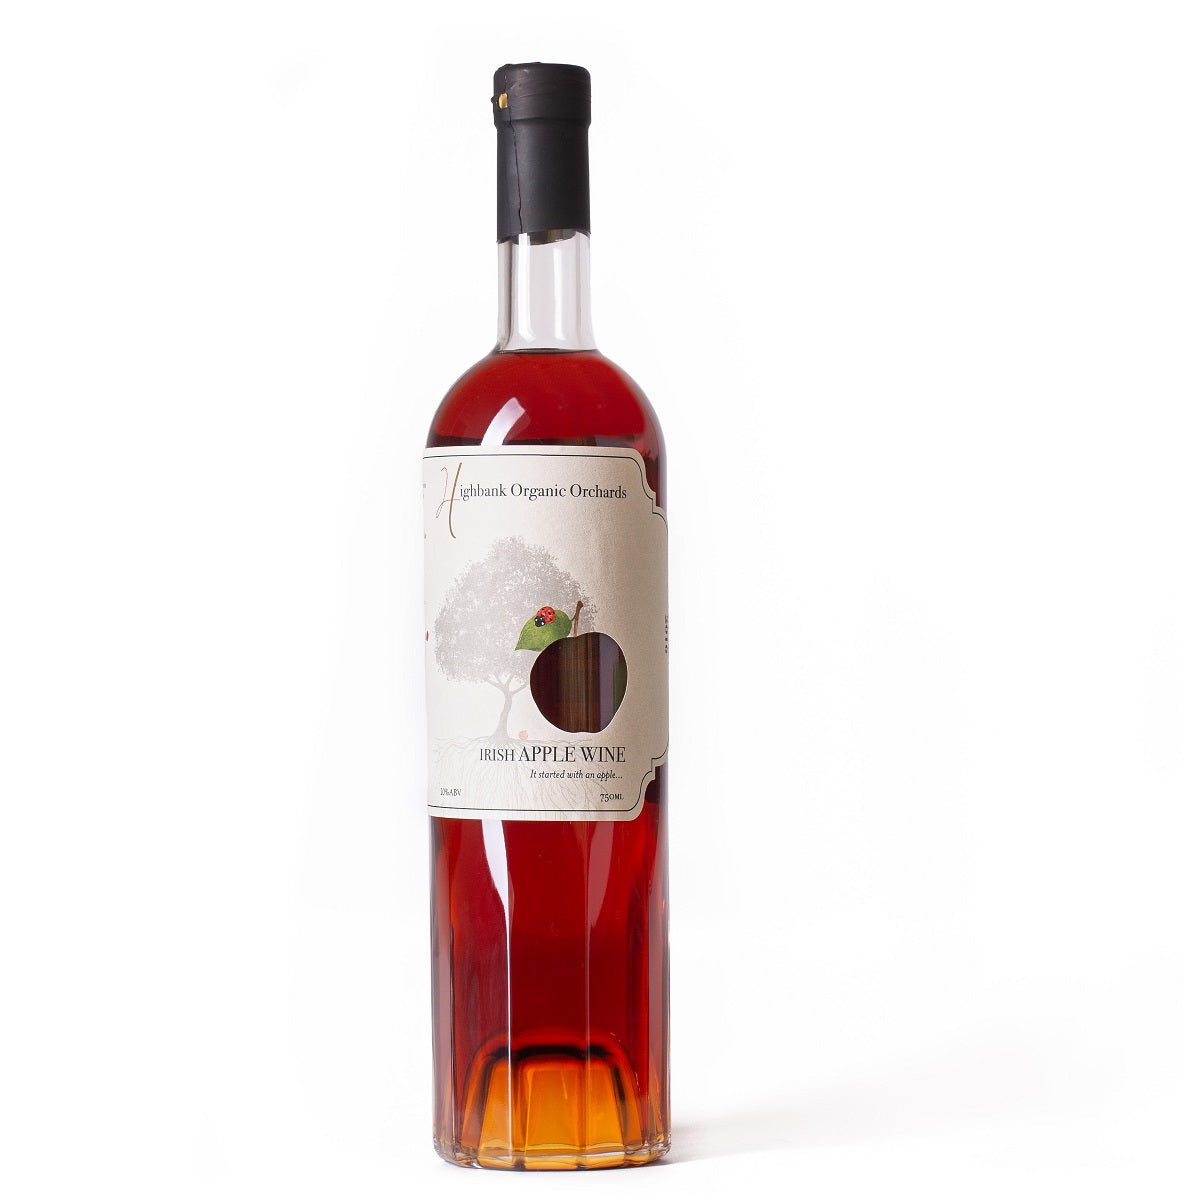 Highbank Organic Orchards Irish Apple Wine 750ml